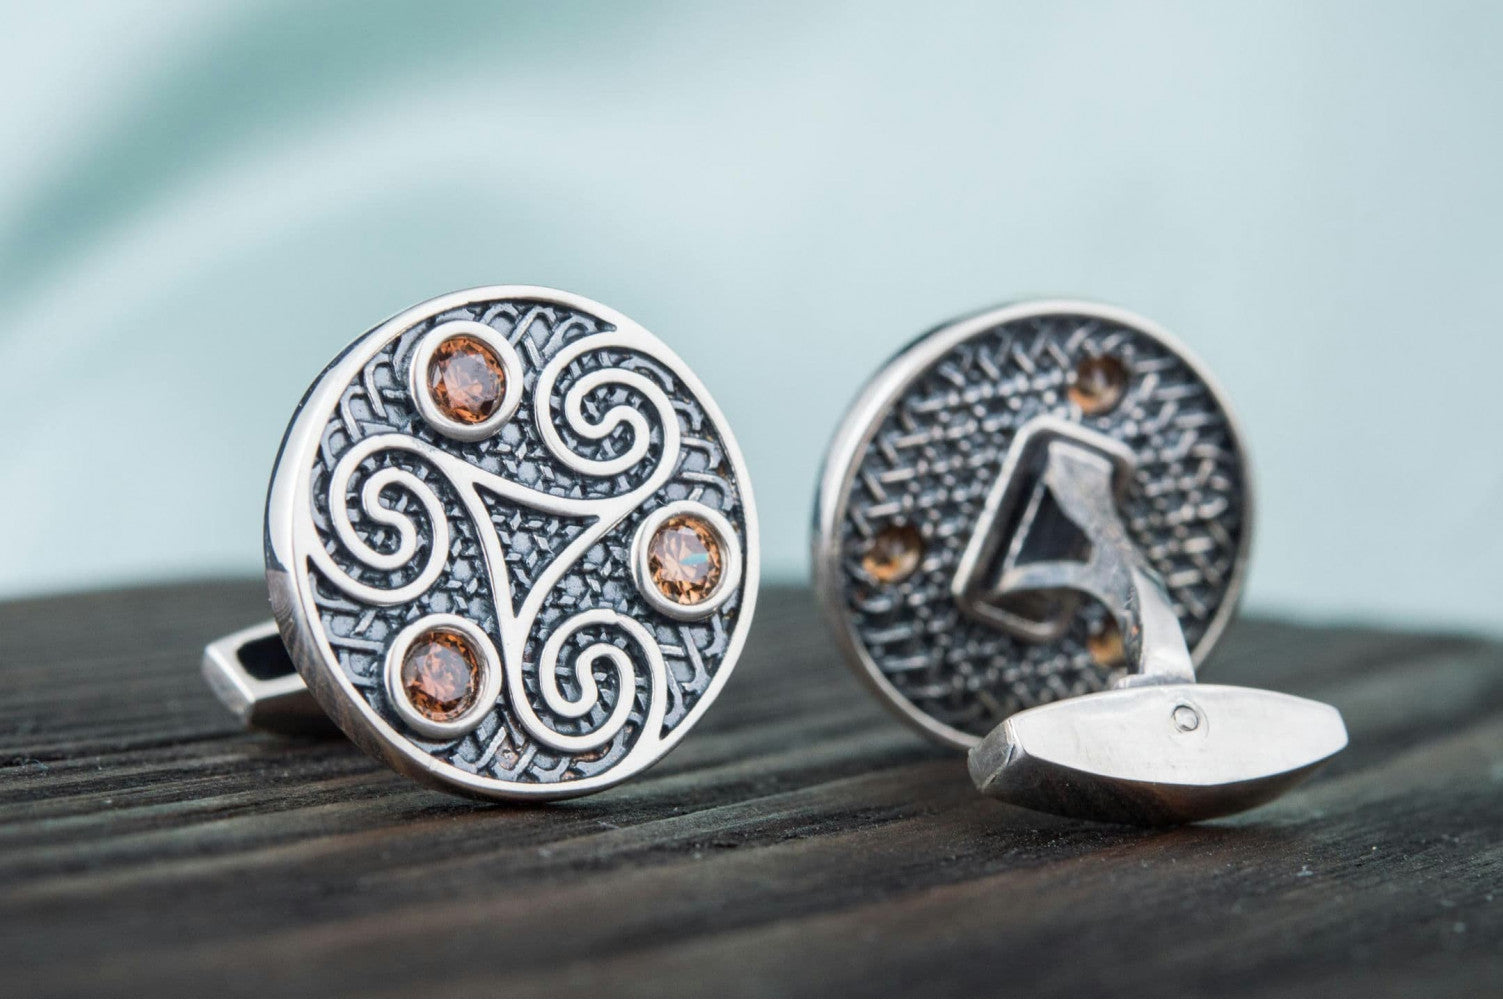 Unique Cufflinks with Triskelion Symbol Sterling Silver Handmade Jewelry